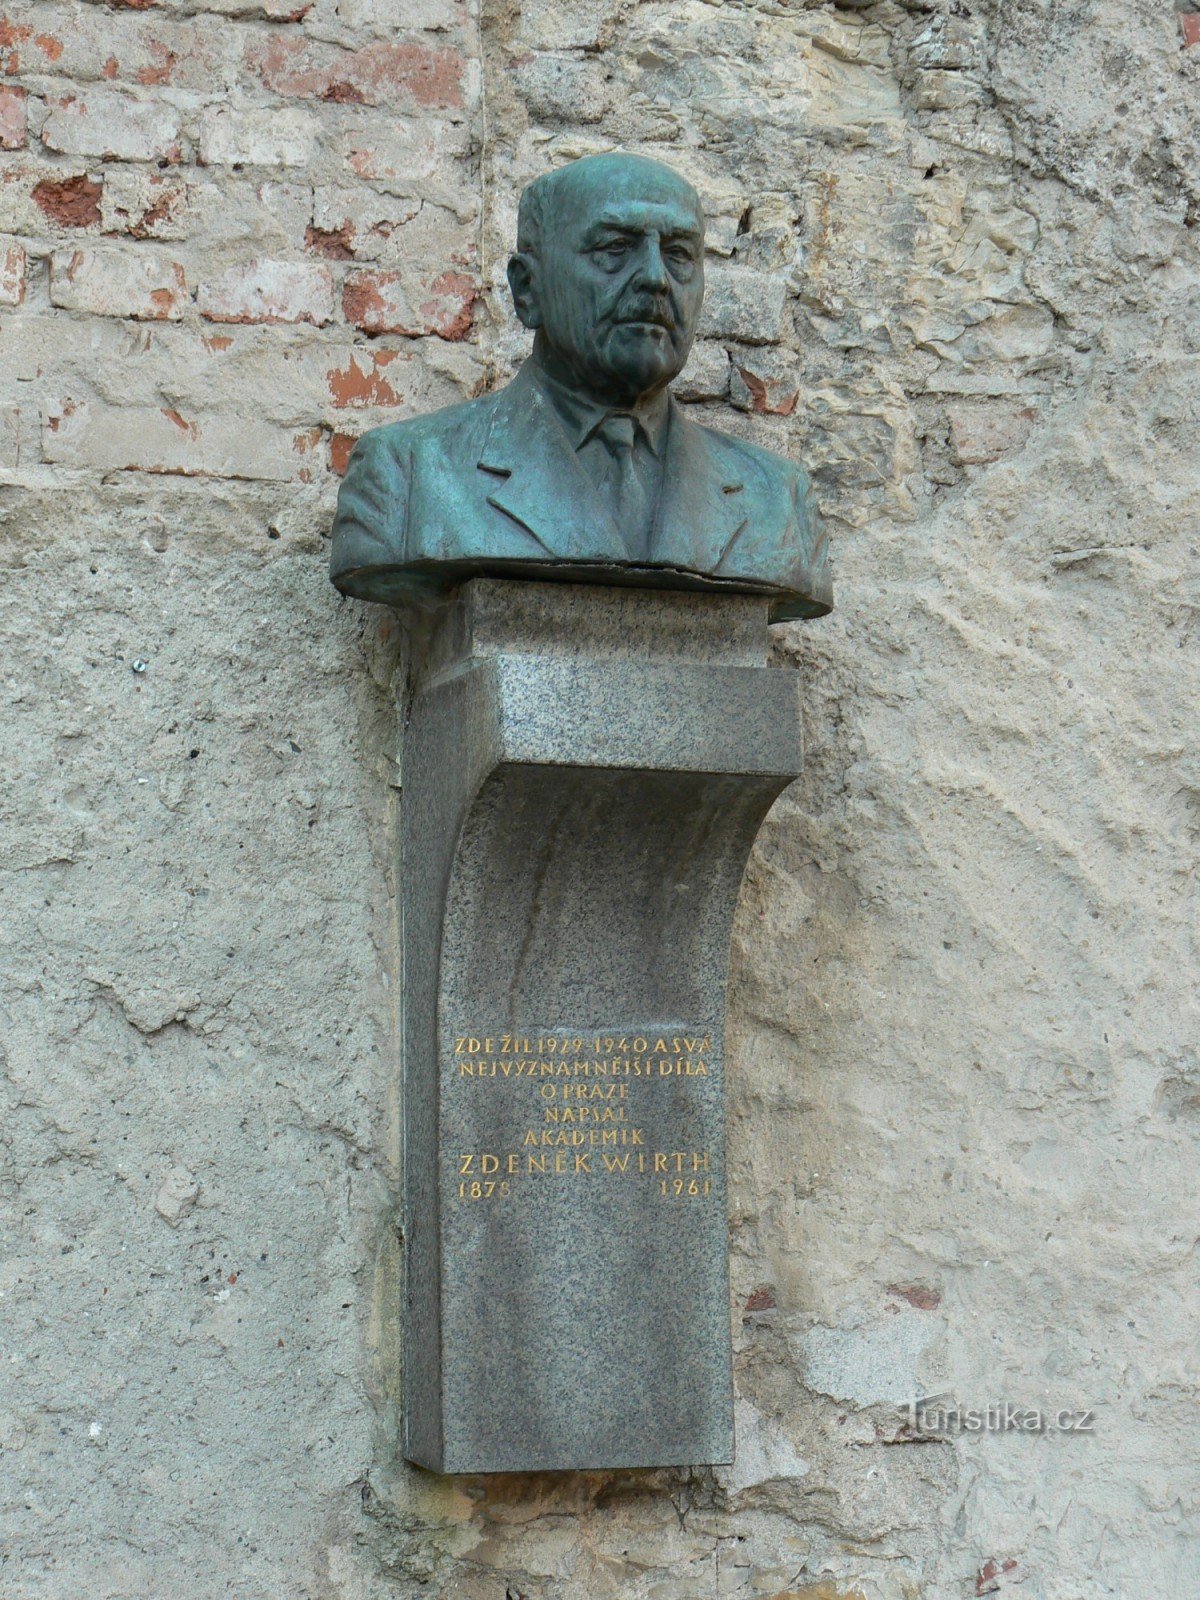 Tấm bảng tưởng niệm Zdeněk Wirth